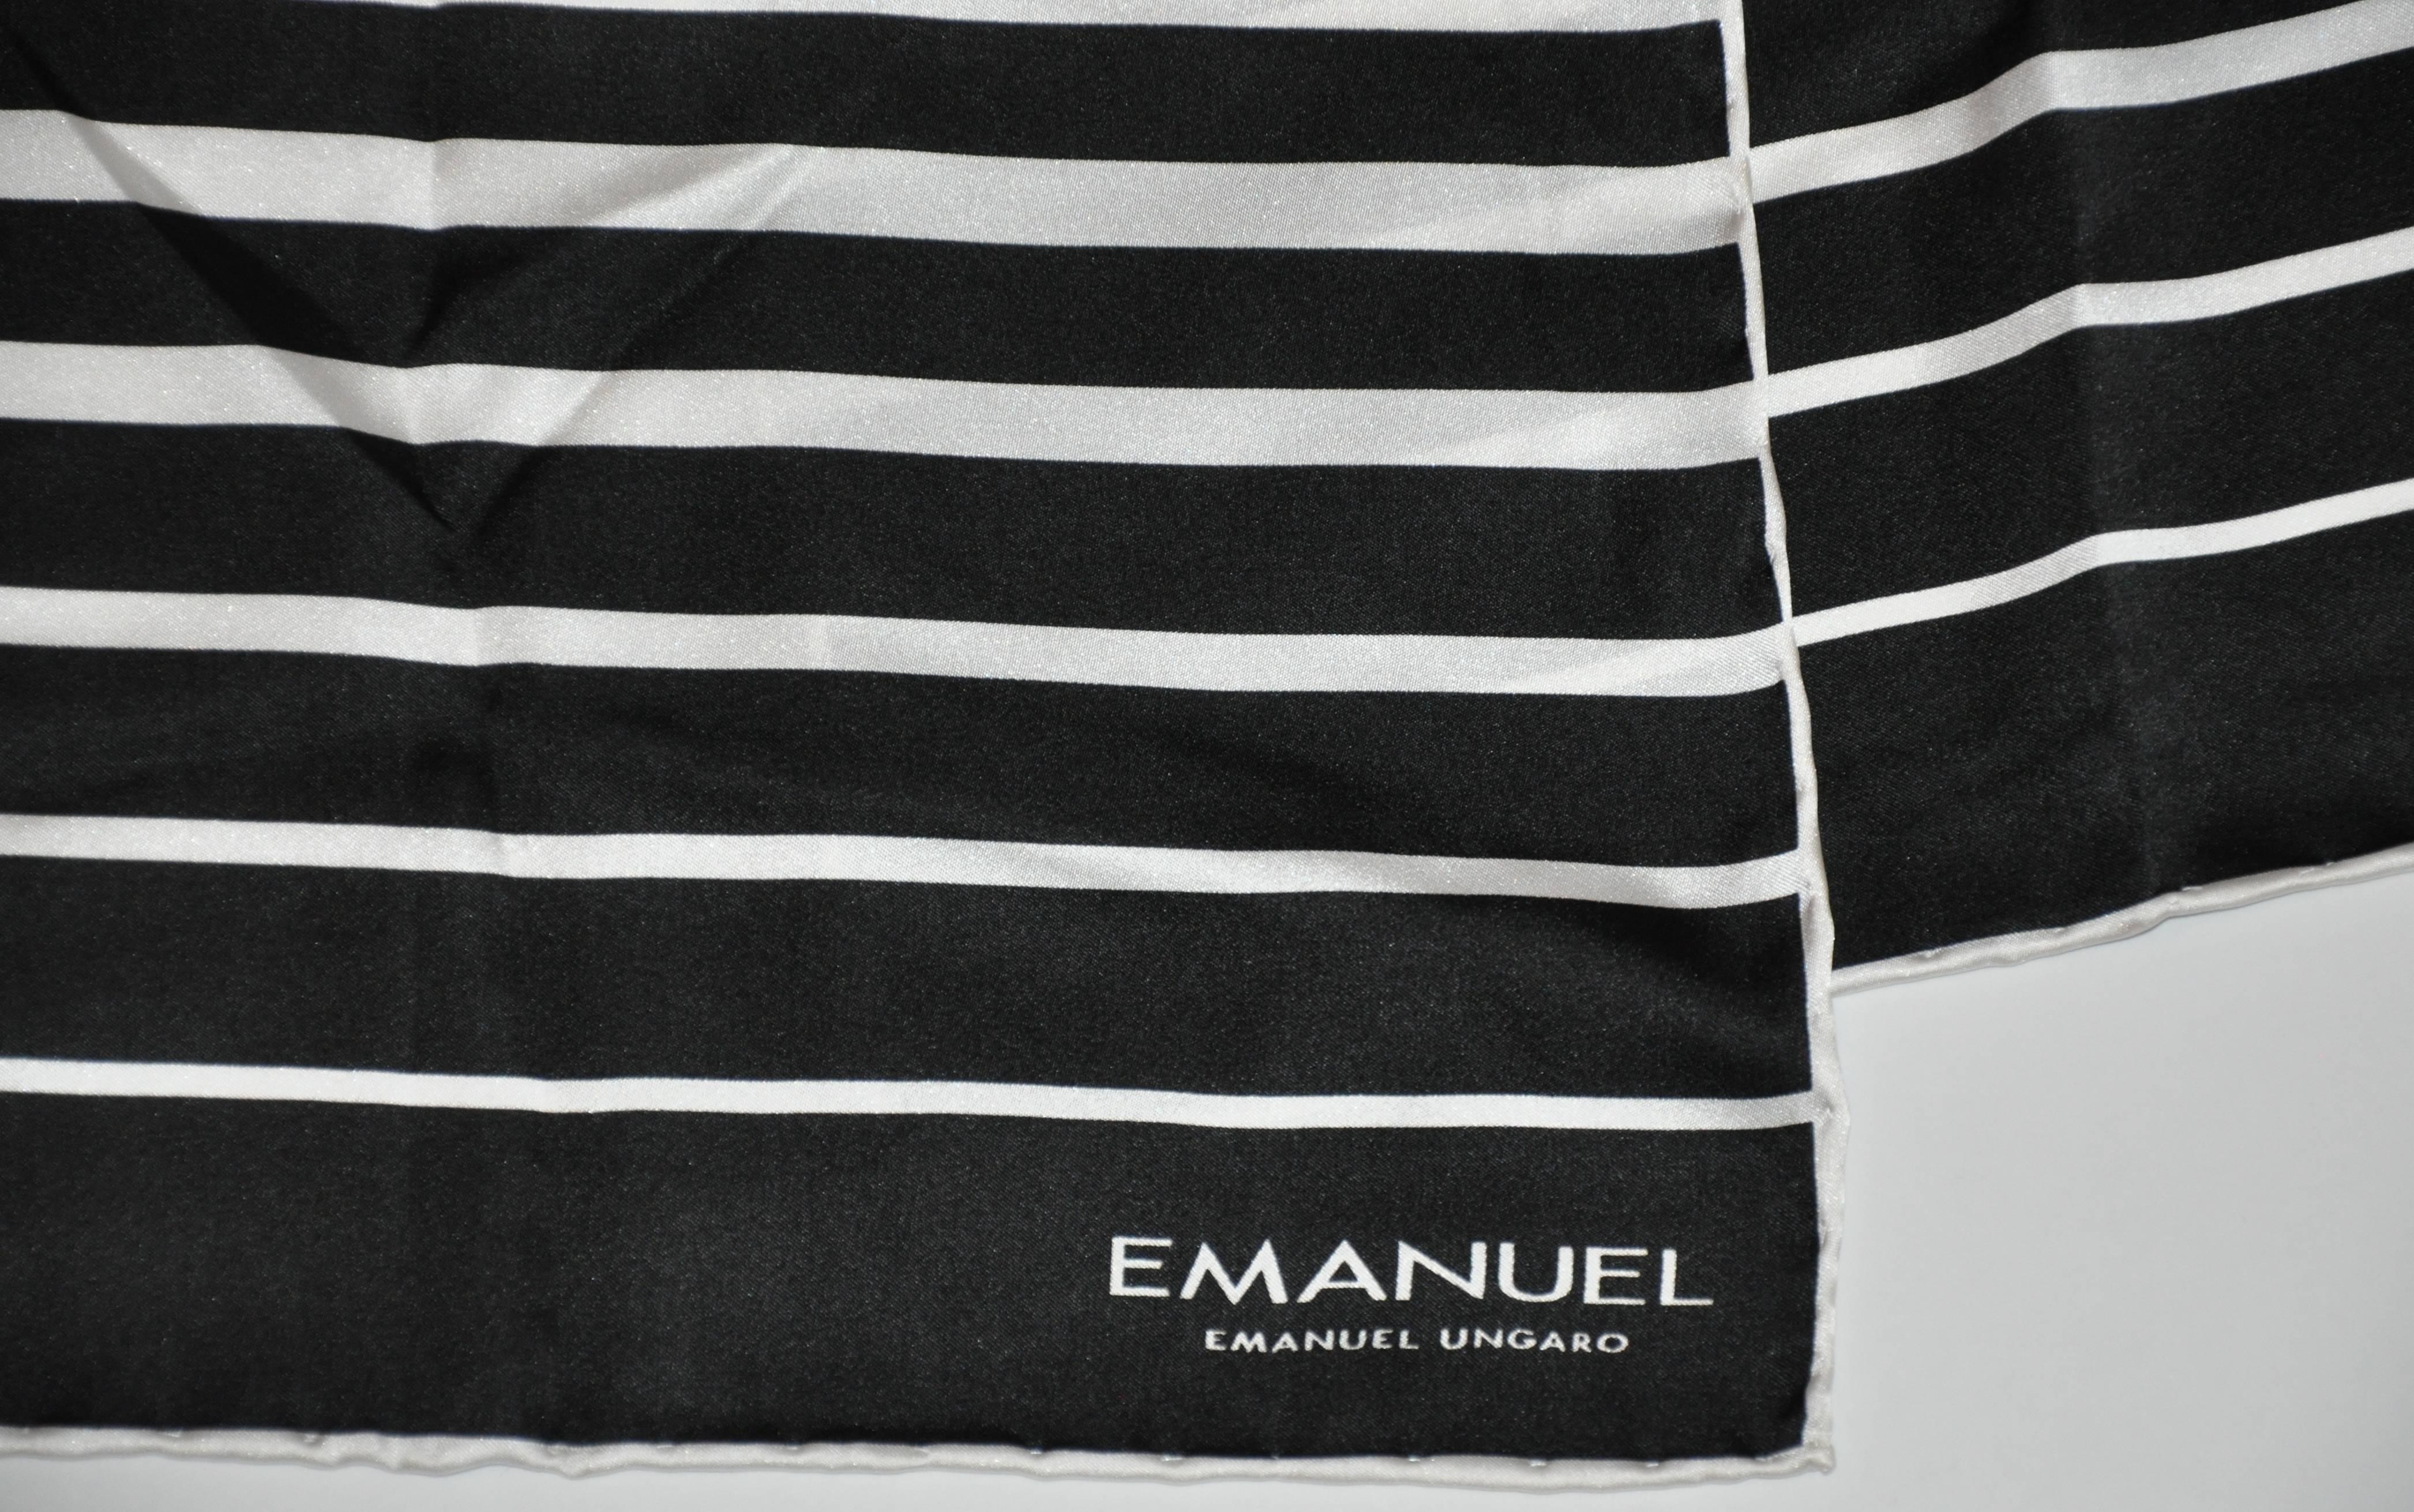         Emanuel Ungaro wonderfully elegant black & white silk rectangle scarf measures 12 1/2